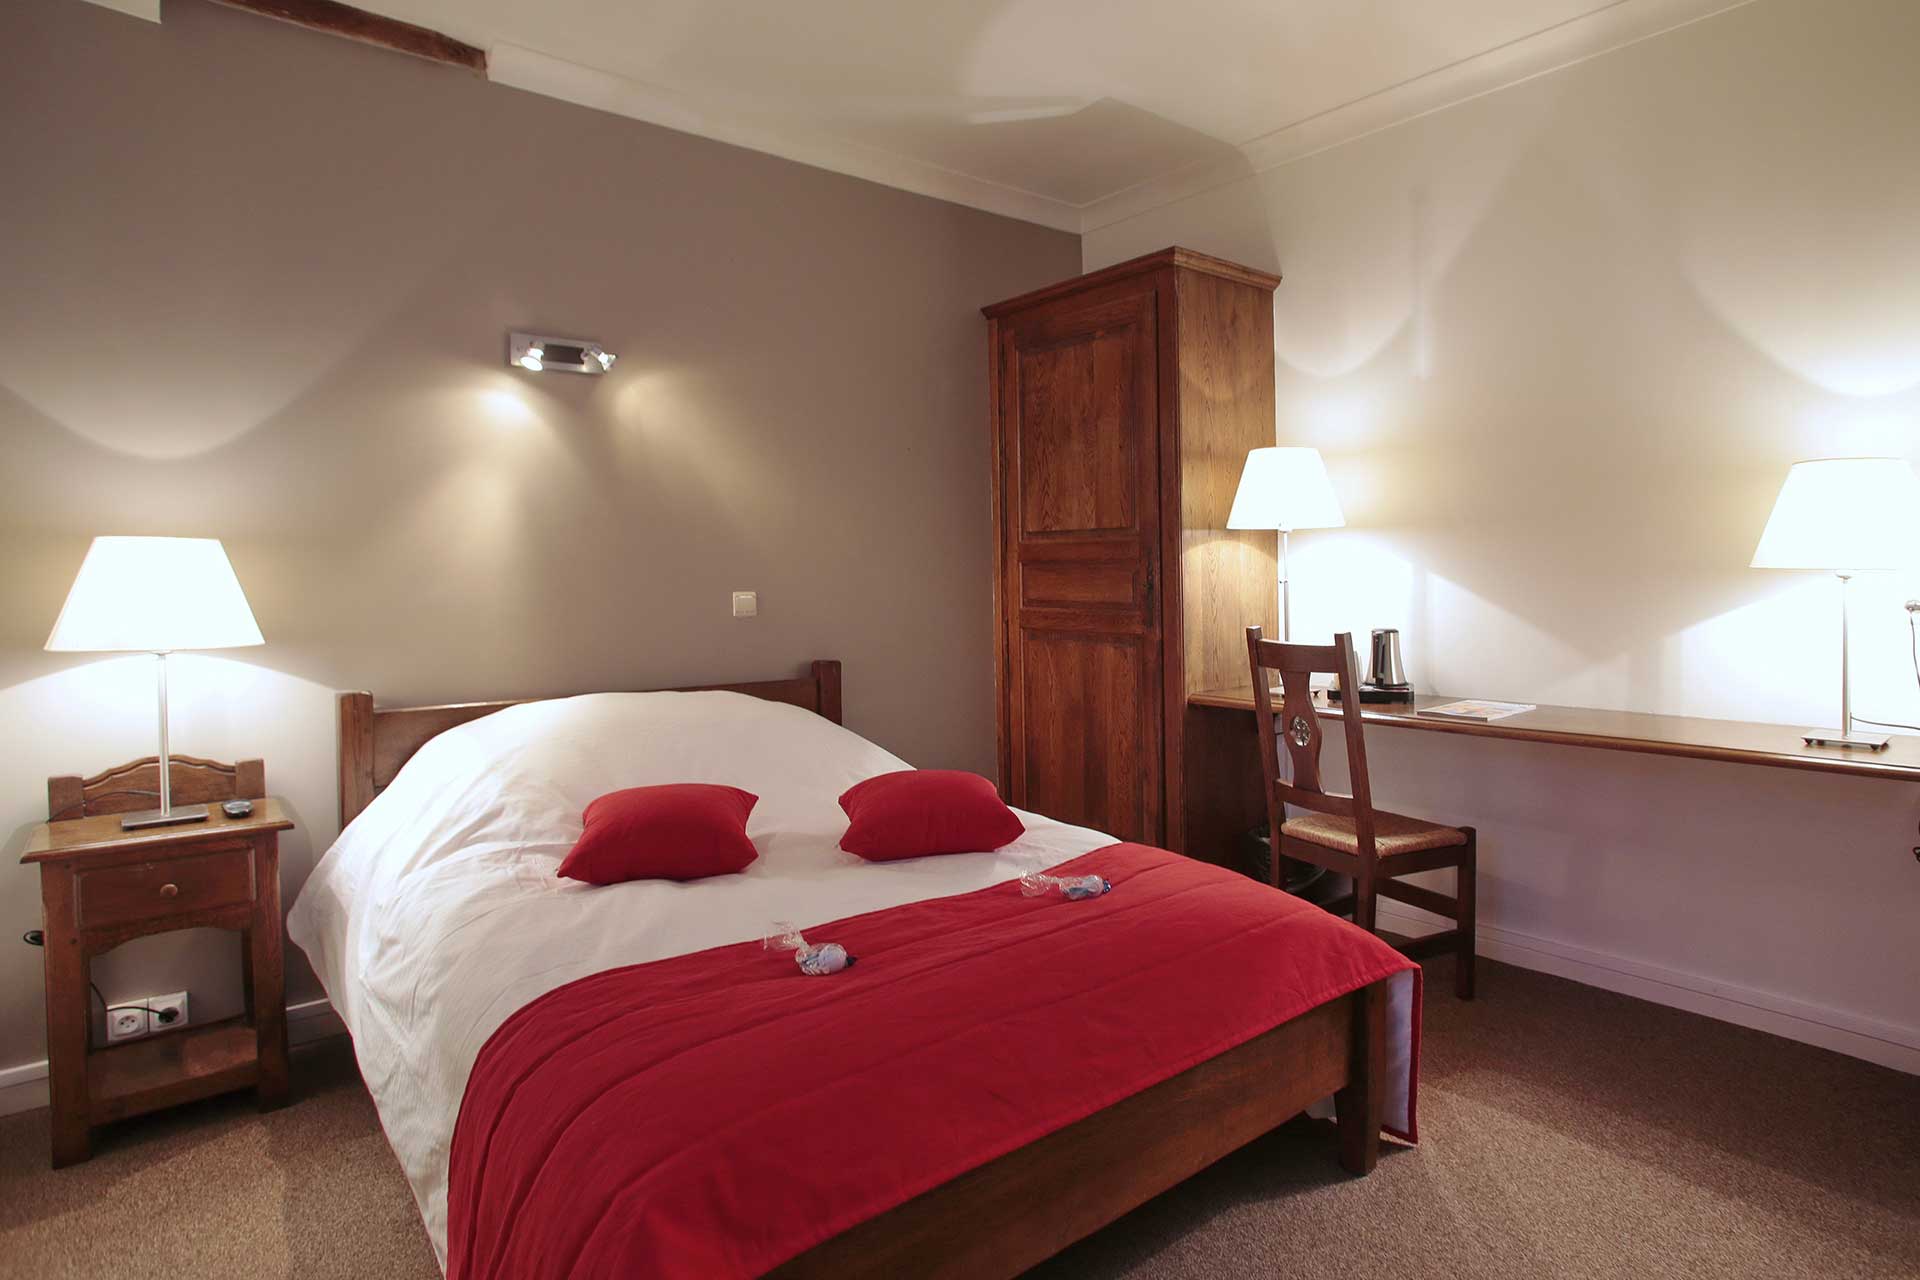 Golfexpedition-Golfreizen-België-Brussel-Pierpont-hotel-twin-room-double-bed